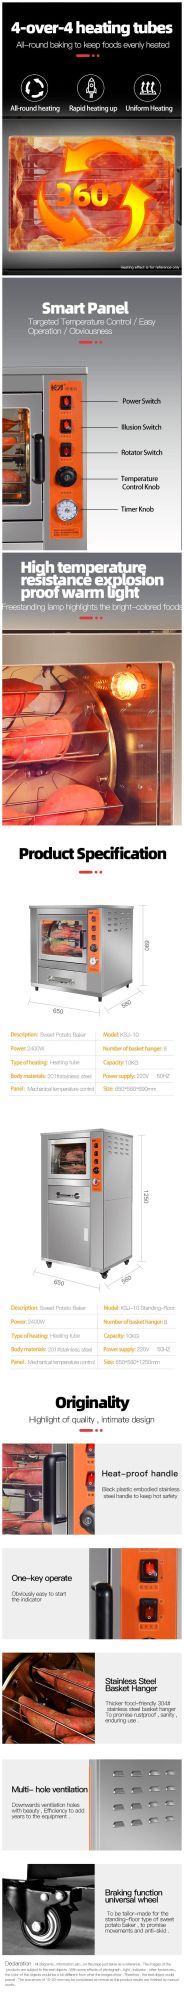 Ksj-10-Yd Hot Sale Commercial Roaster Sweet Potato Machine Corn Grilling Machine Automatic